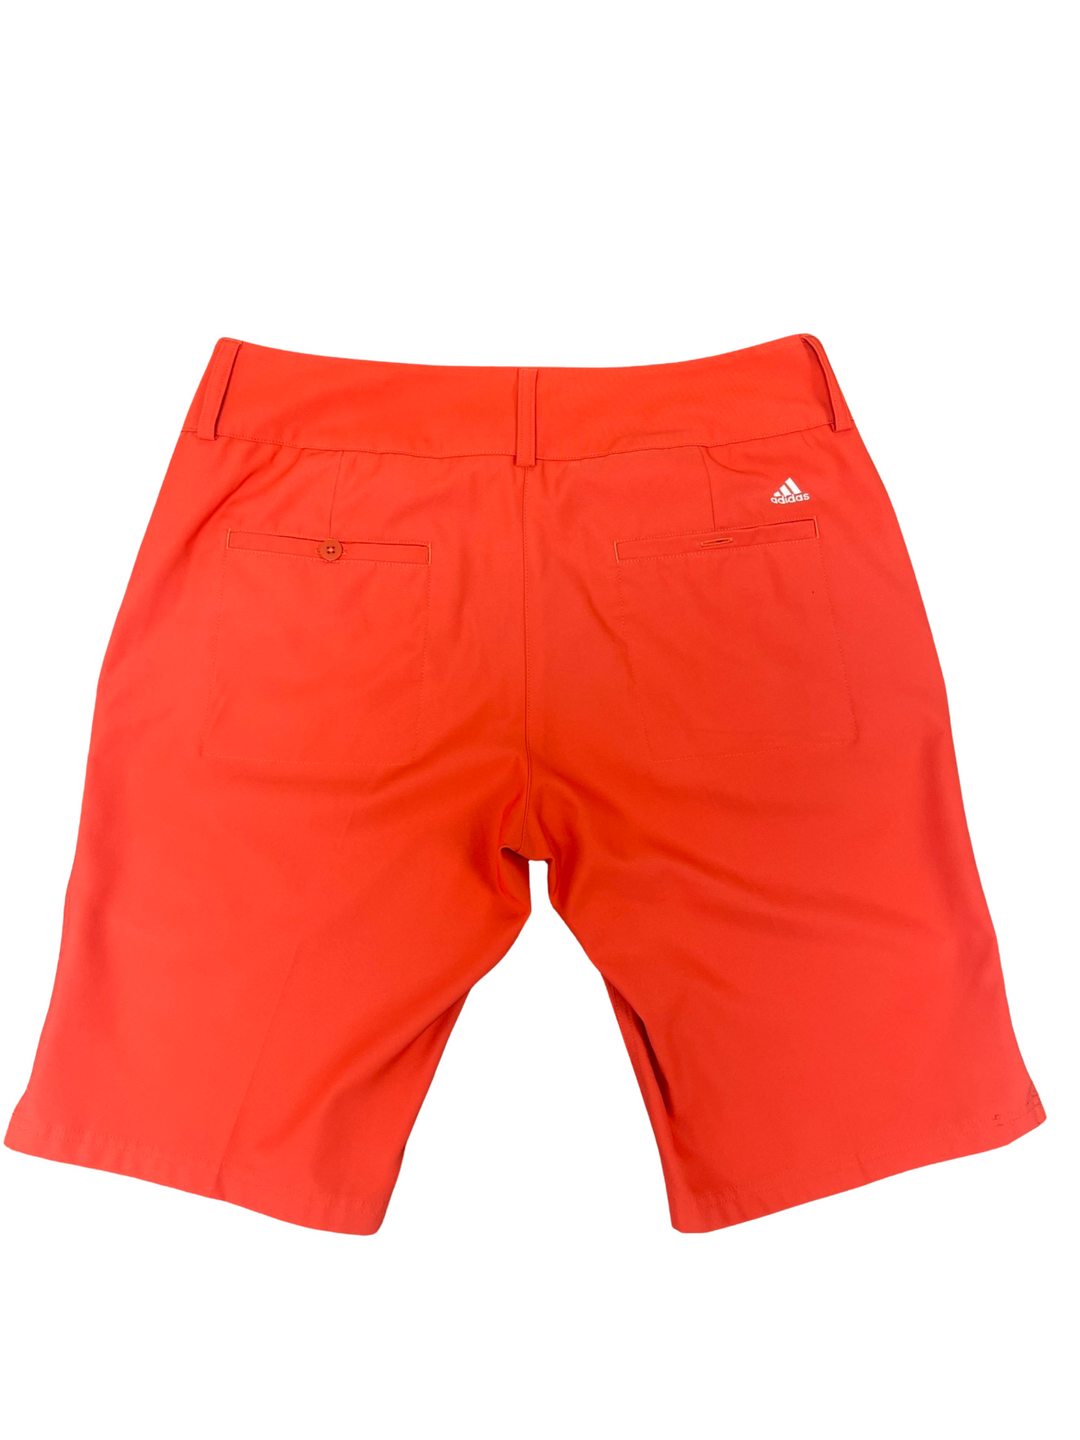 Adidas ClimaLite Coral Bermuda Golf Short- Size 12